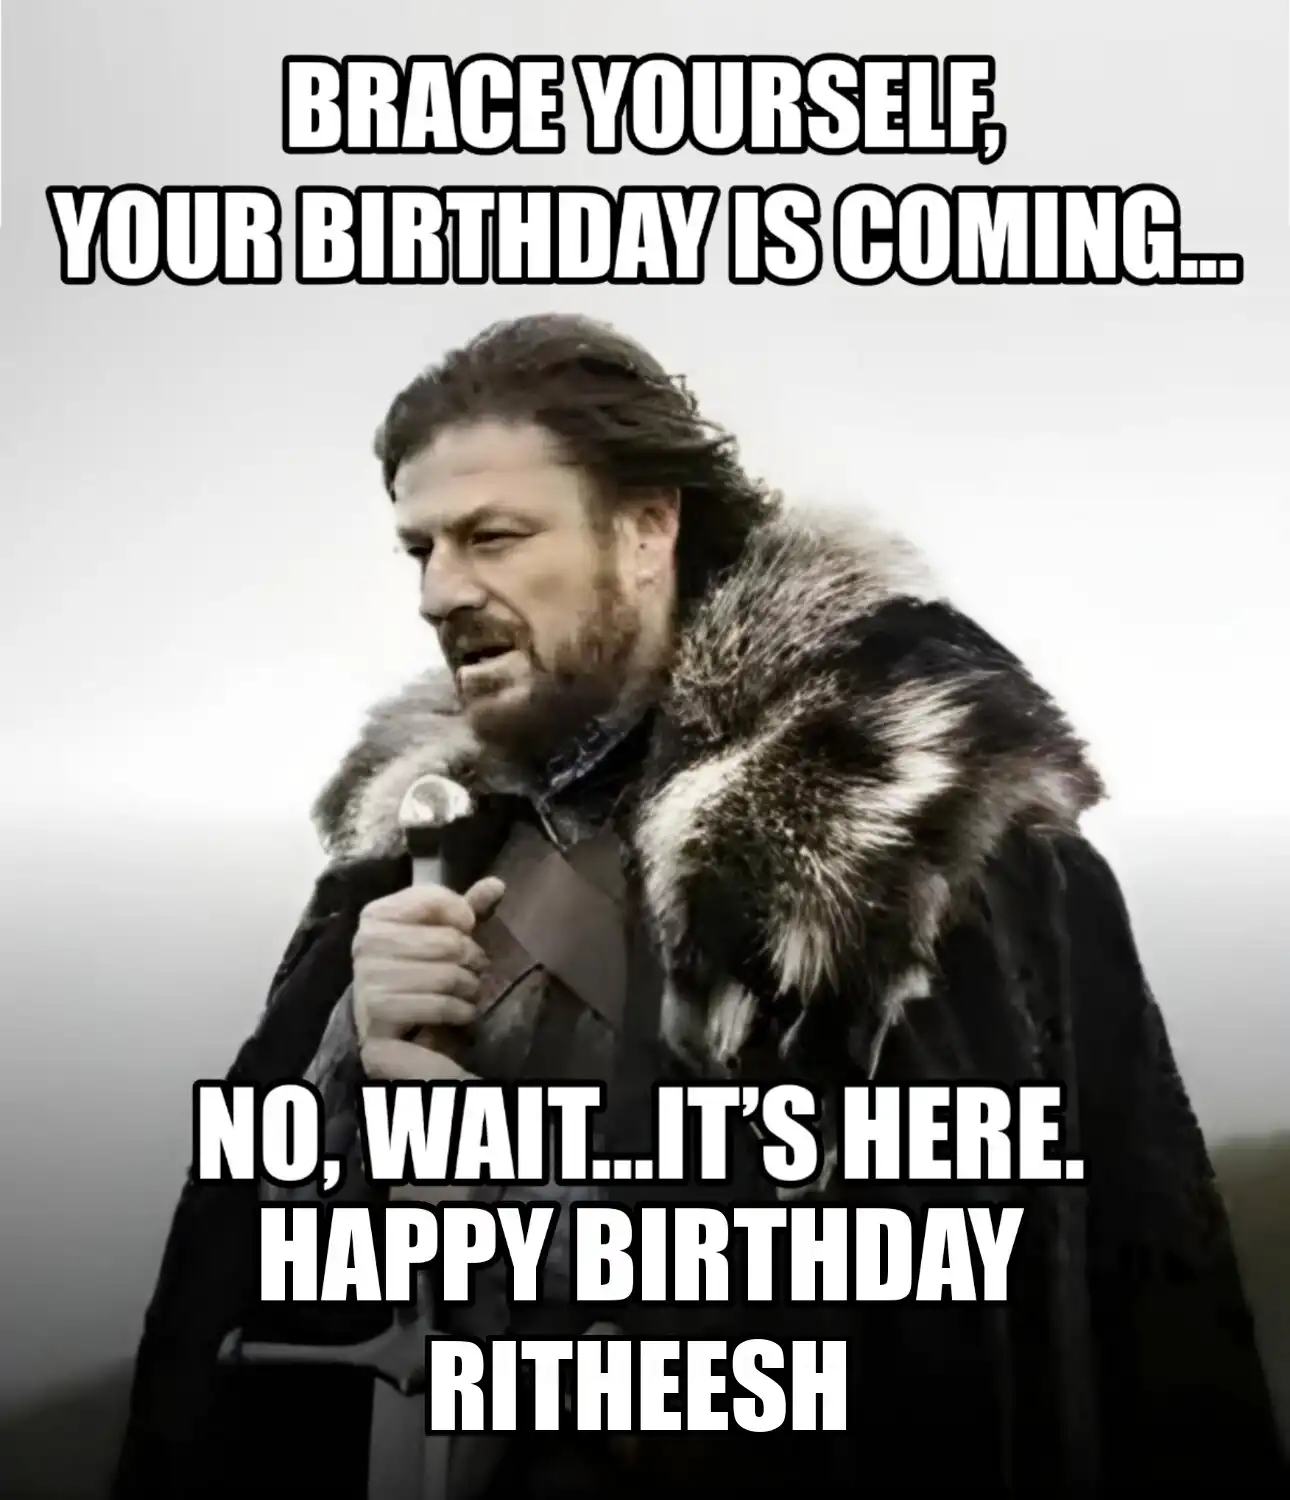 Happy Birthday Ritheesh Brace Yourself Your Birthday Is Coming Meme